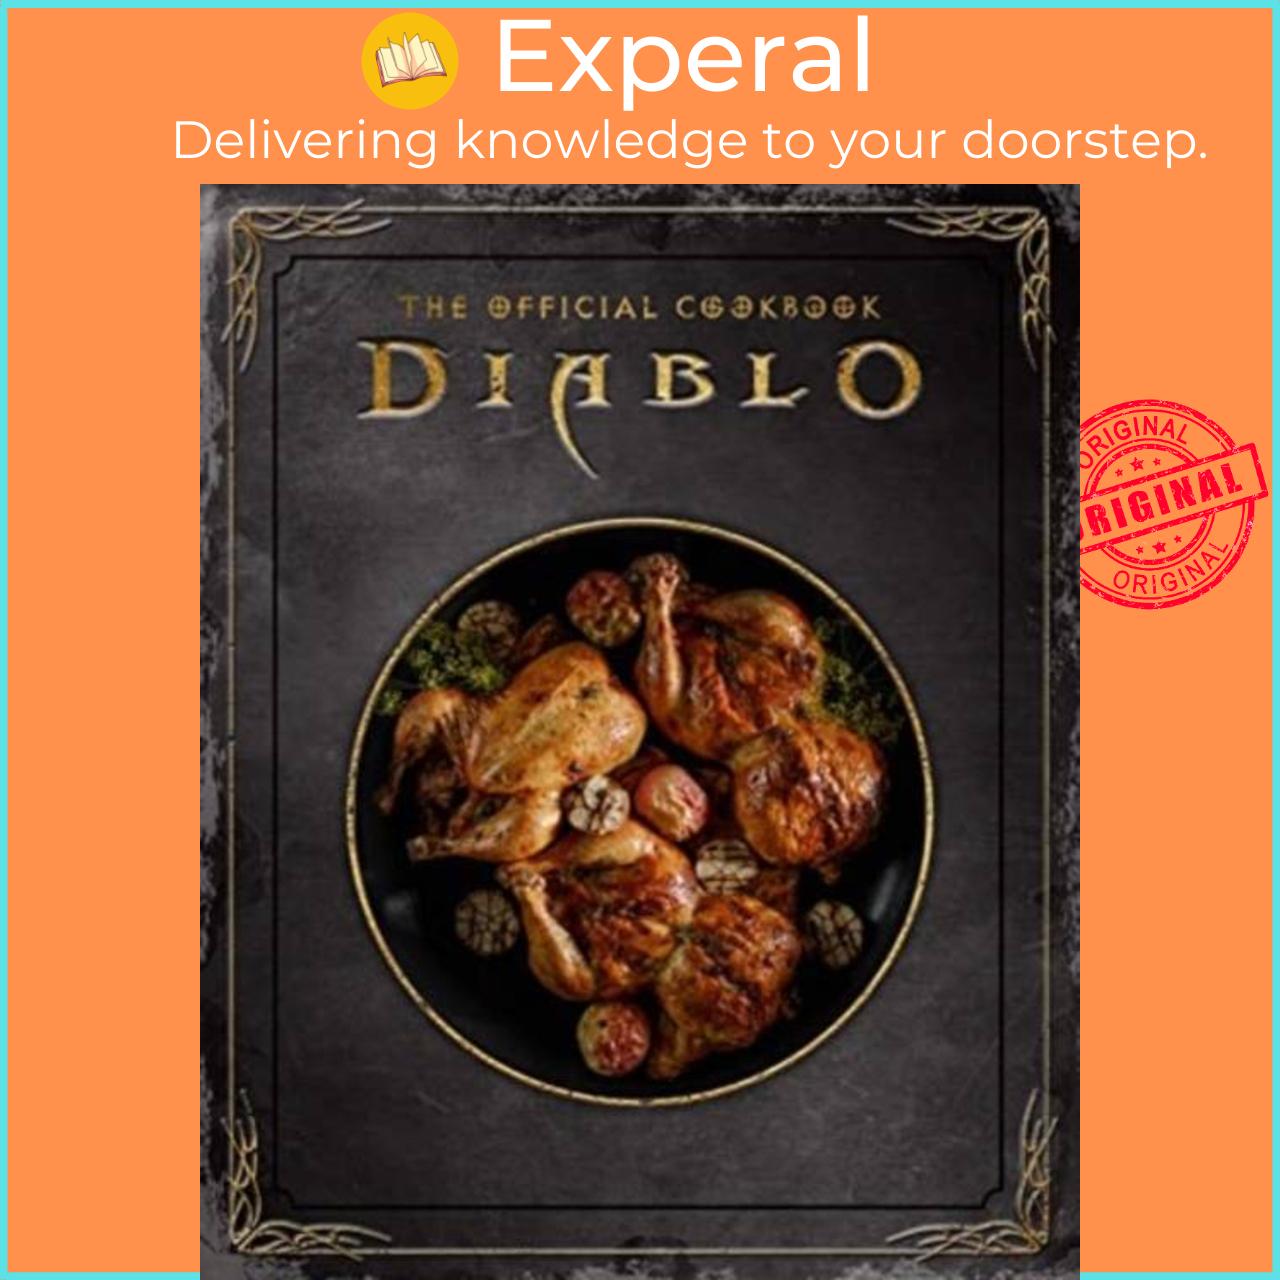 Hình ảnh Sách - Diablo: The Official Cookbook by Rick Barba (UK edition, hardcover)